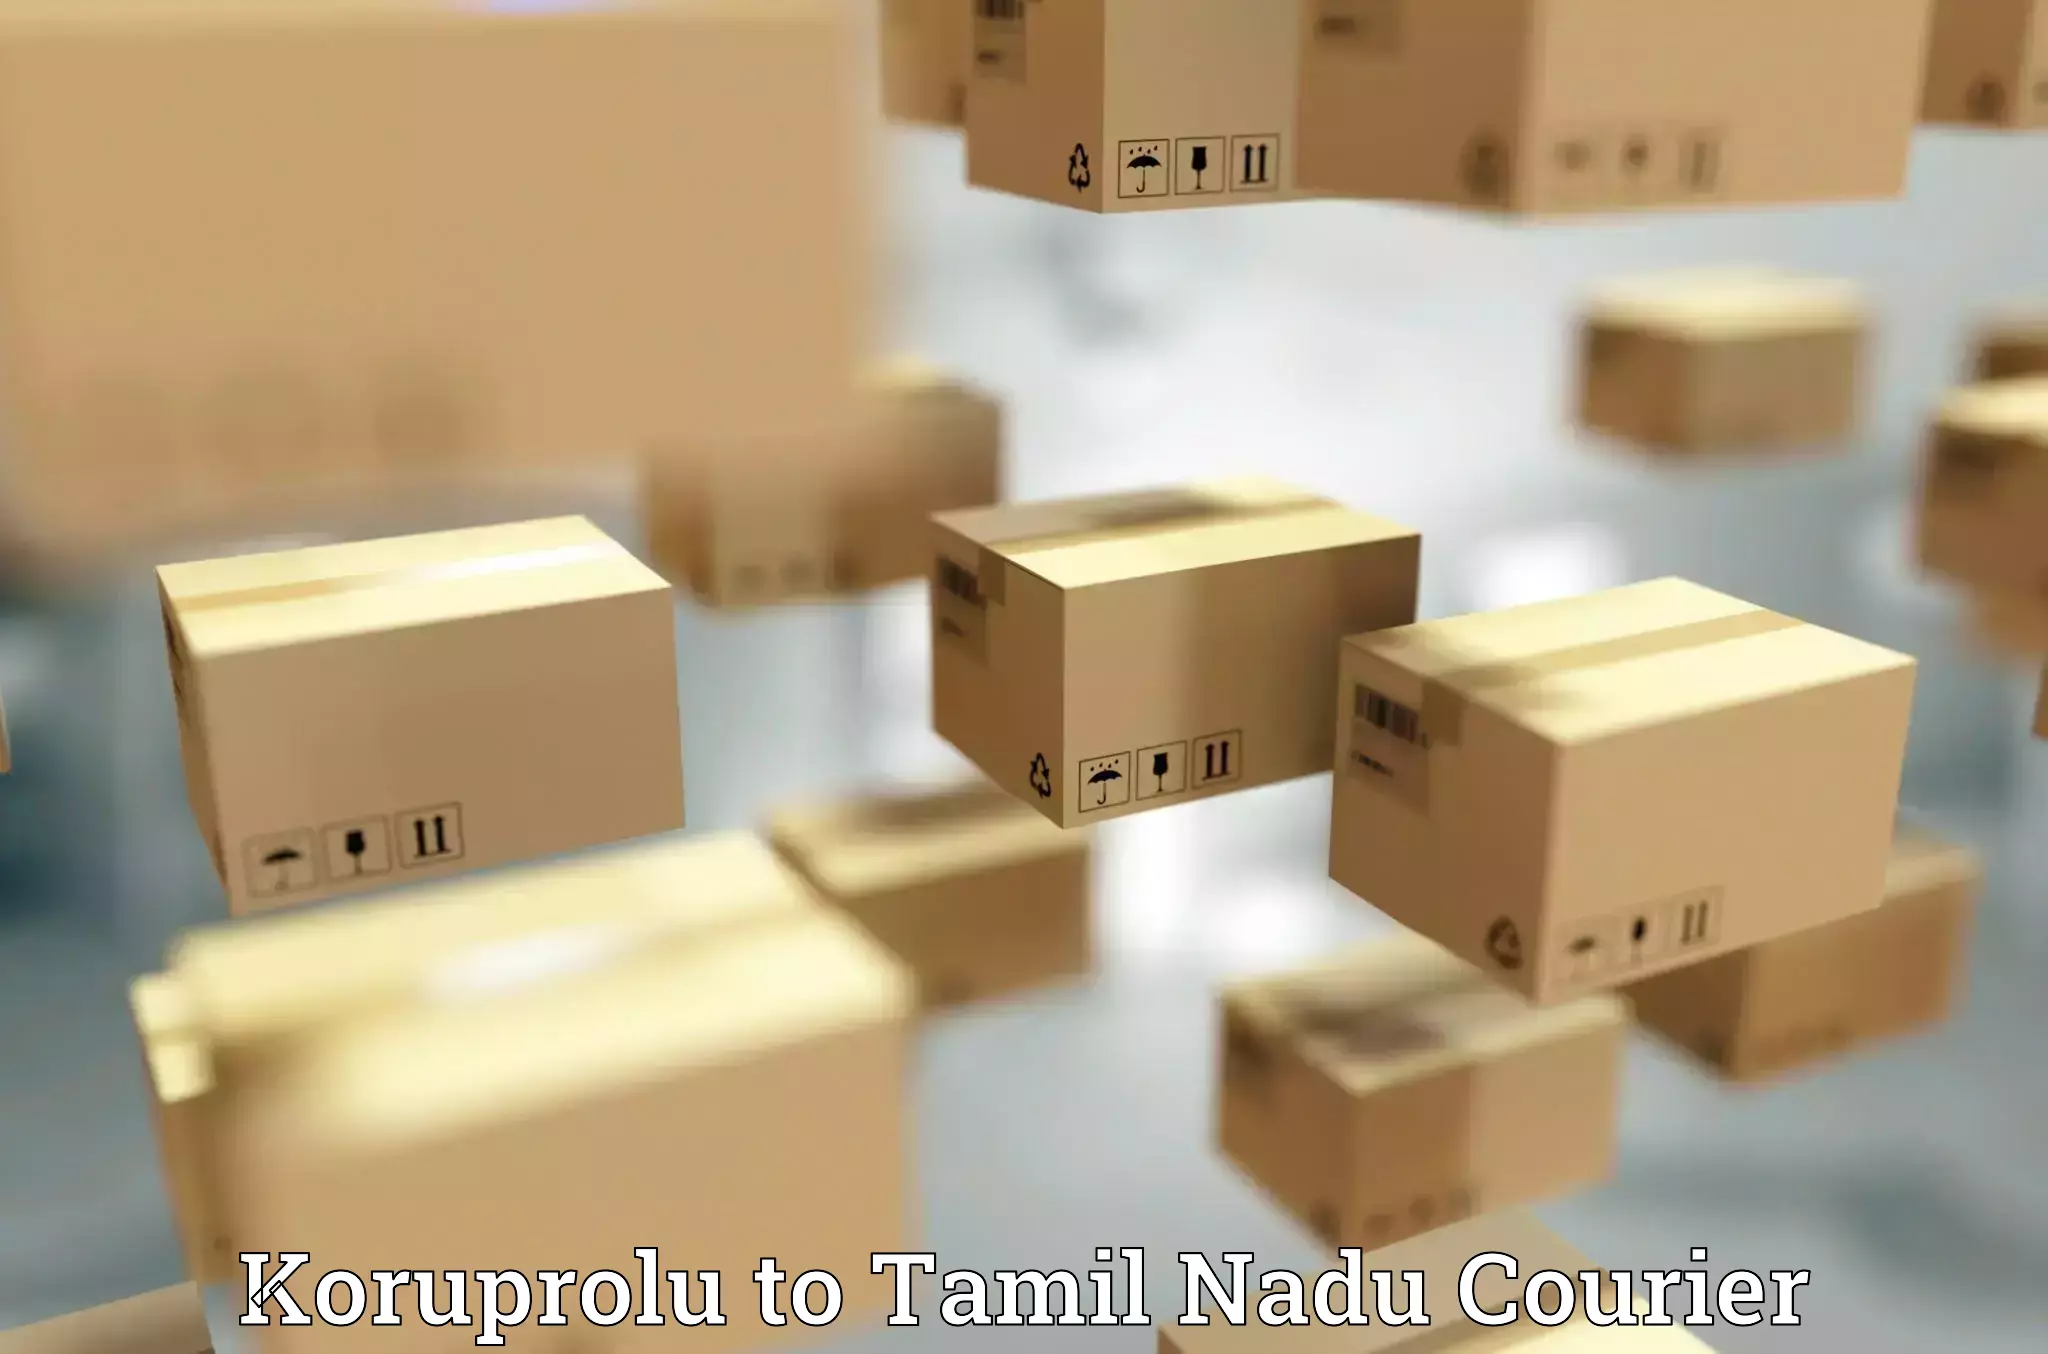 User-friendly delivery service Koruprolu to Tamil Nadu